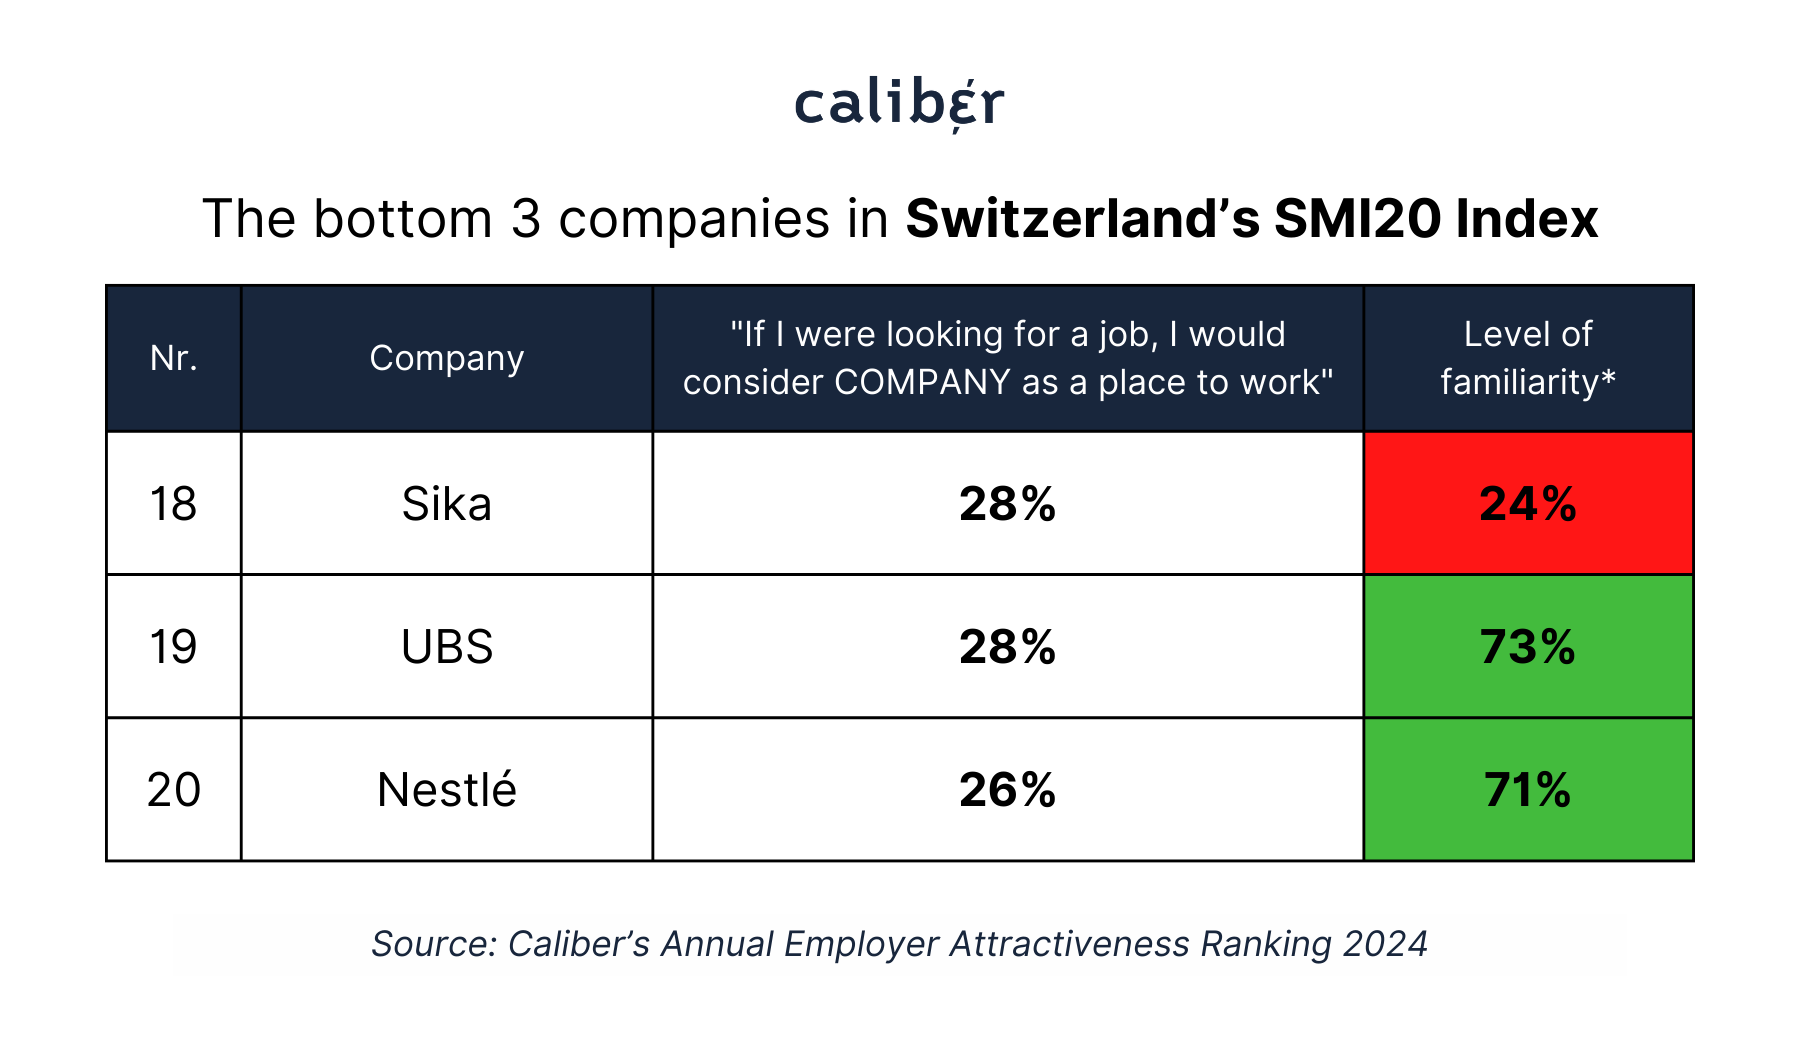 The bottom 3 companies in Switzerland SMI20 Index